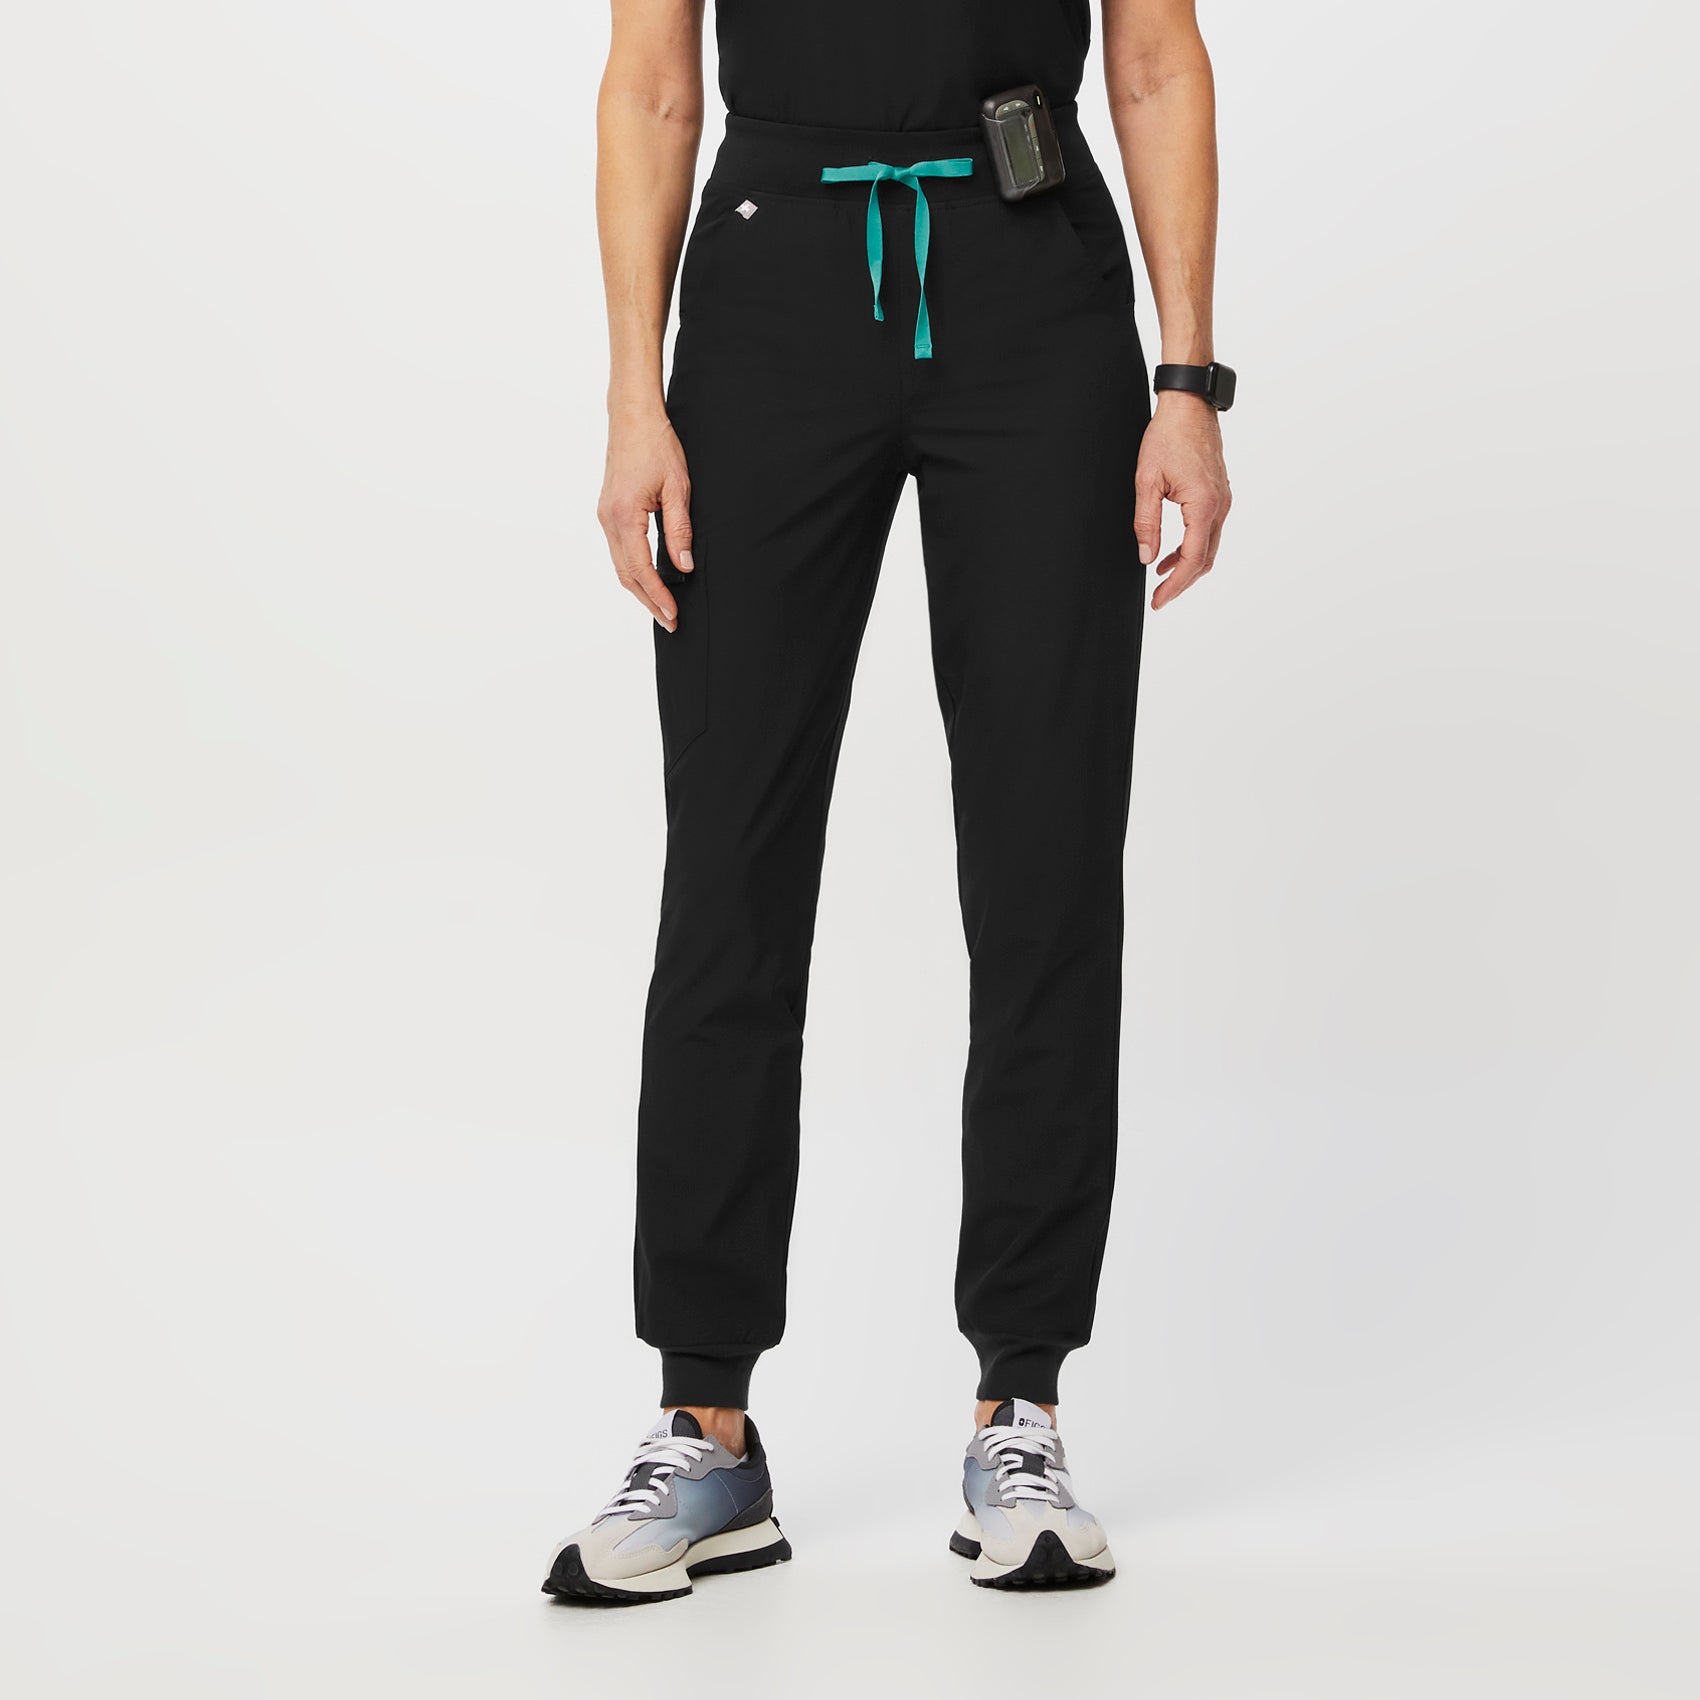 FIGS Zamora Jogger Style Scrub Pants for Women — Slim Fit, 6